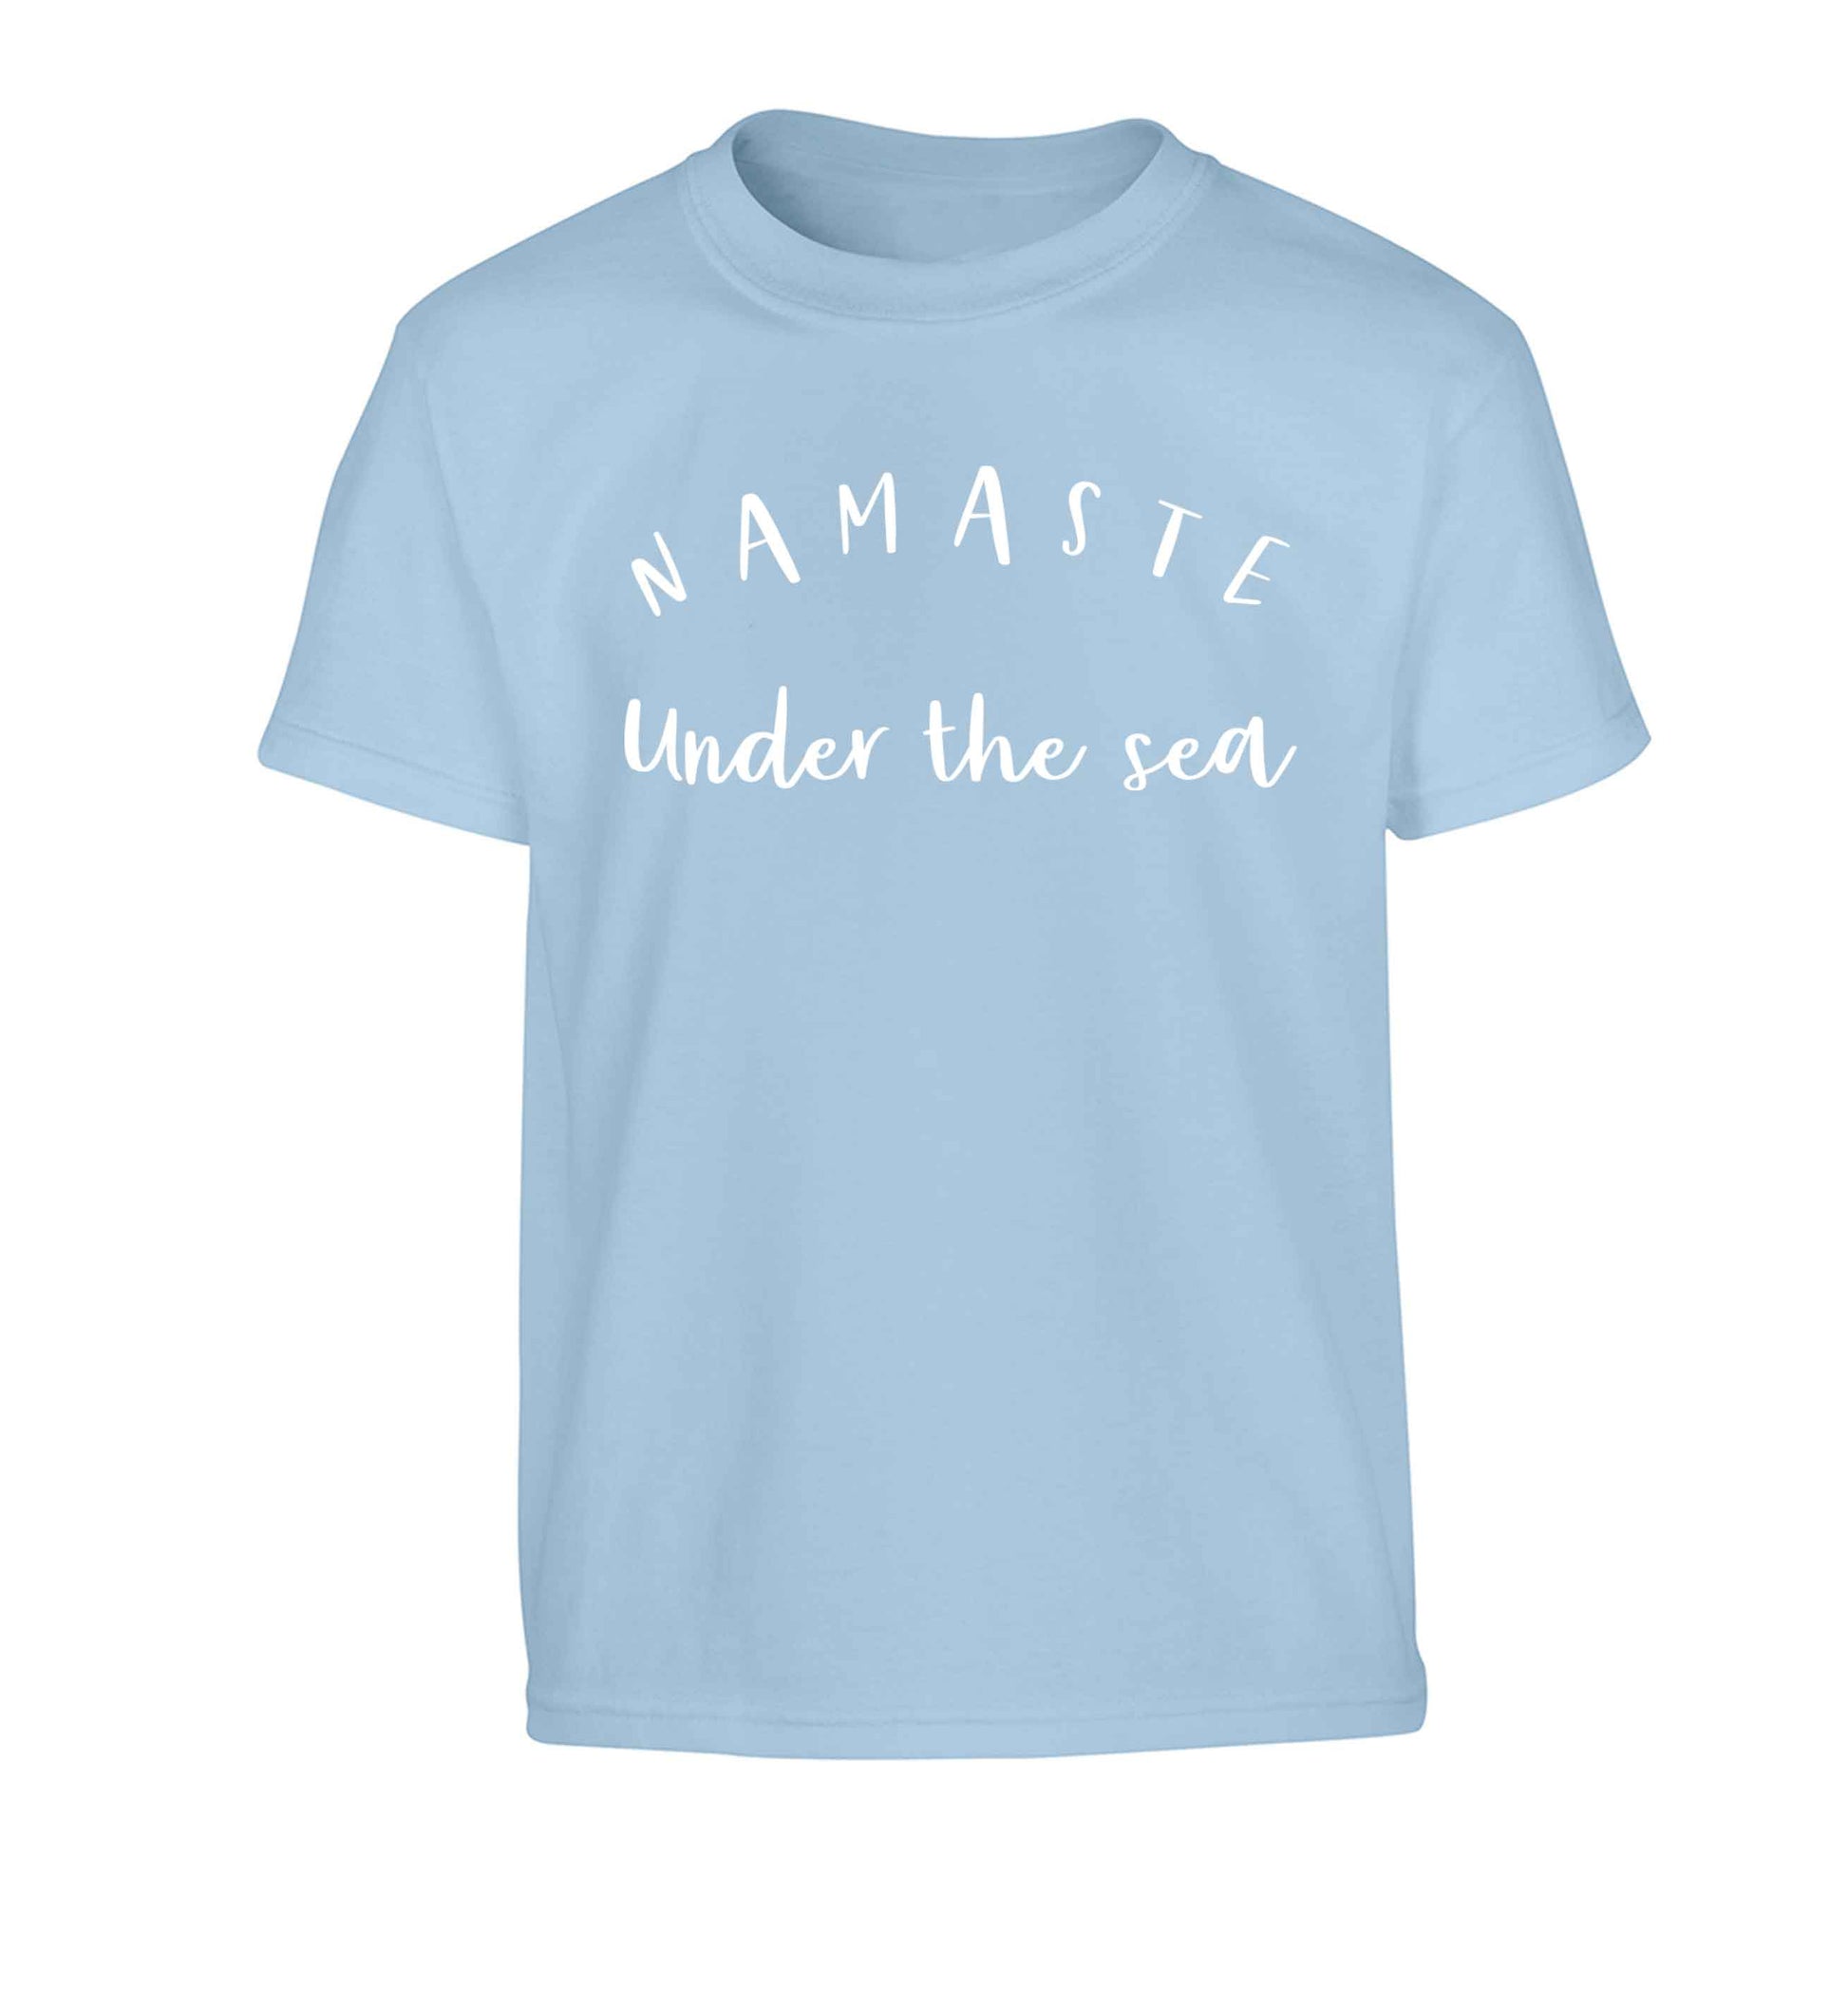 Namaste under the water Children's light blue Tshirt 12-13 Years